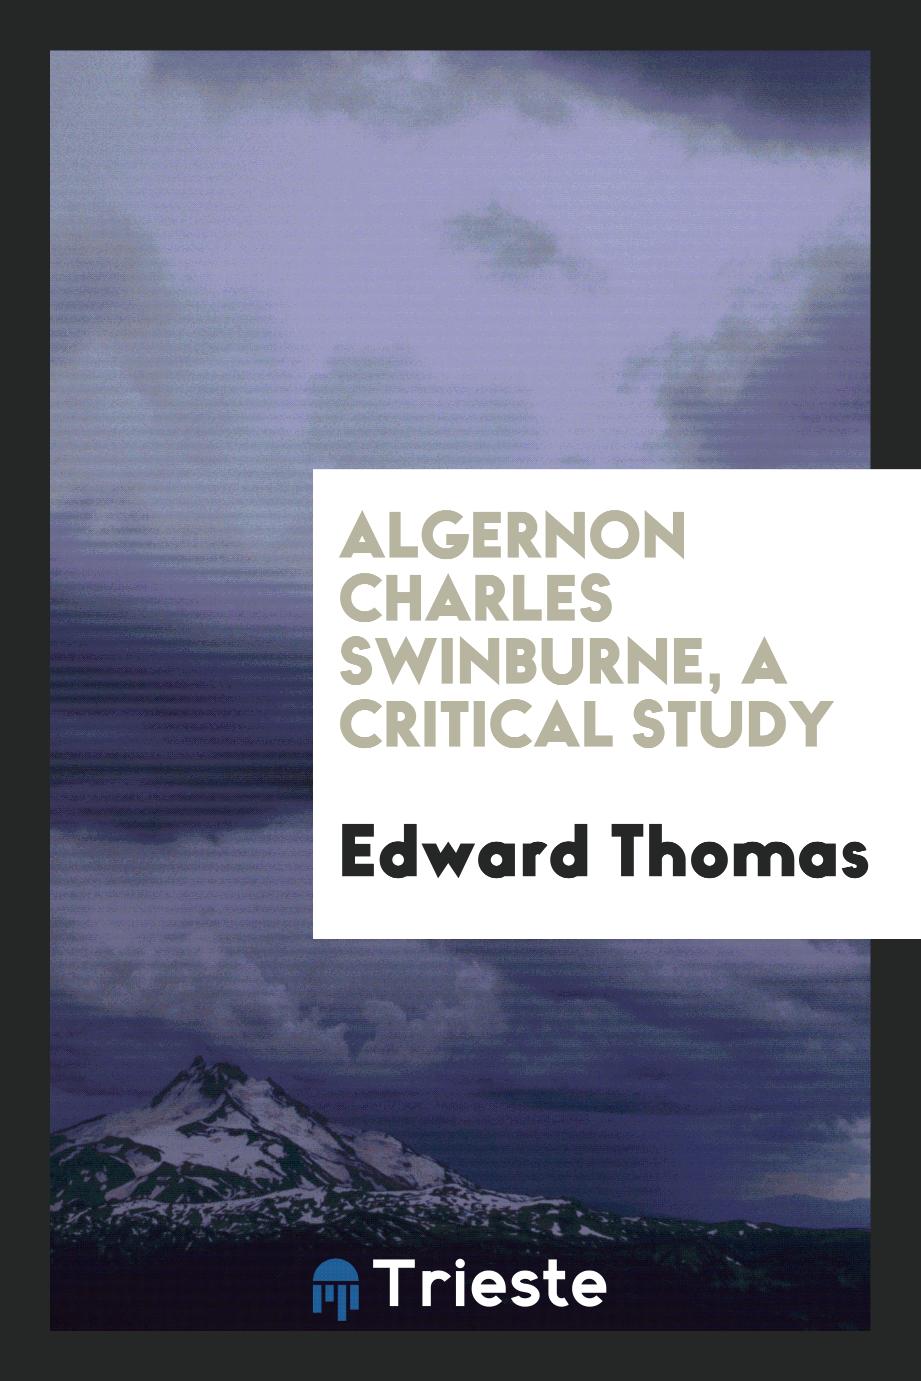 Algernon Charles Swinburne, a critical study